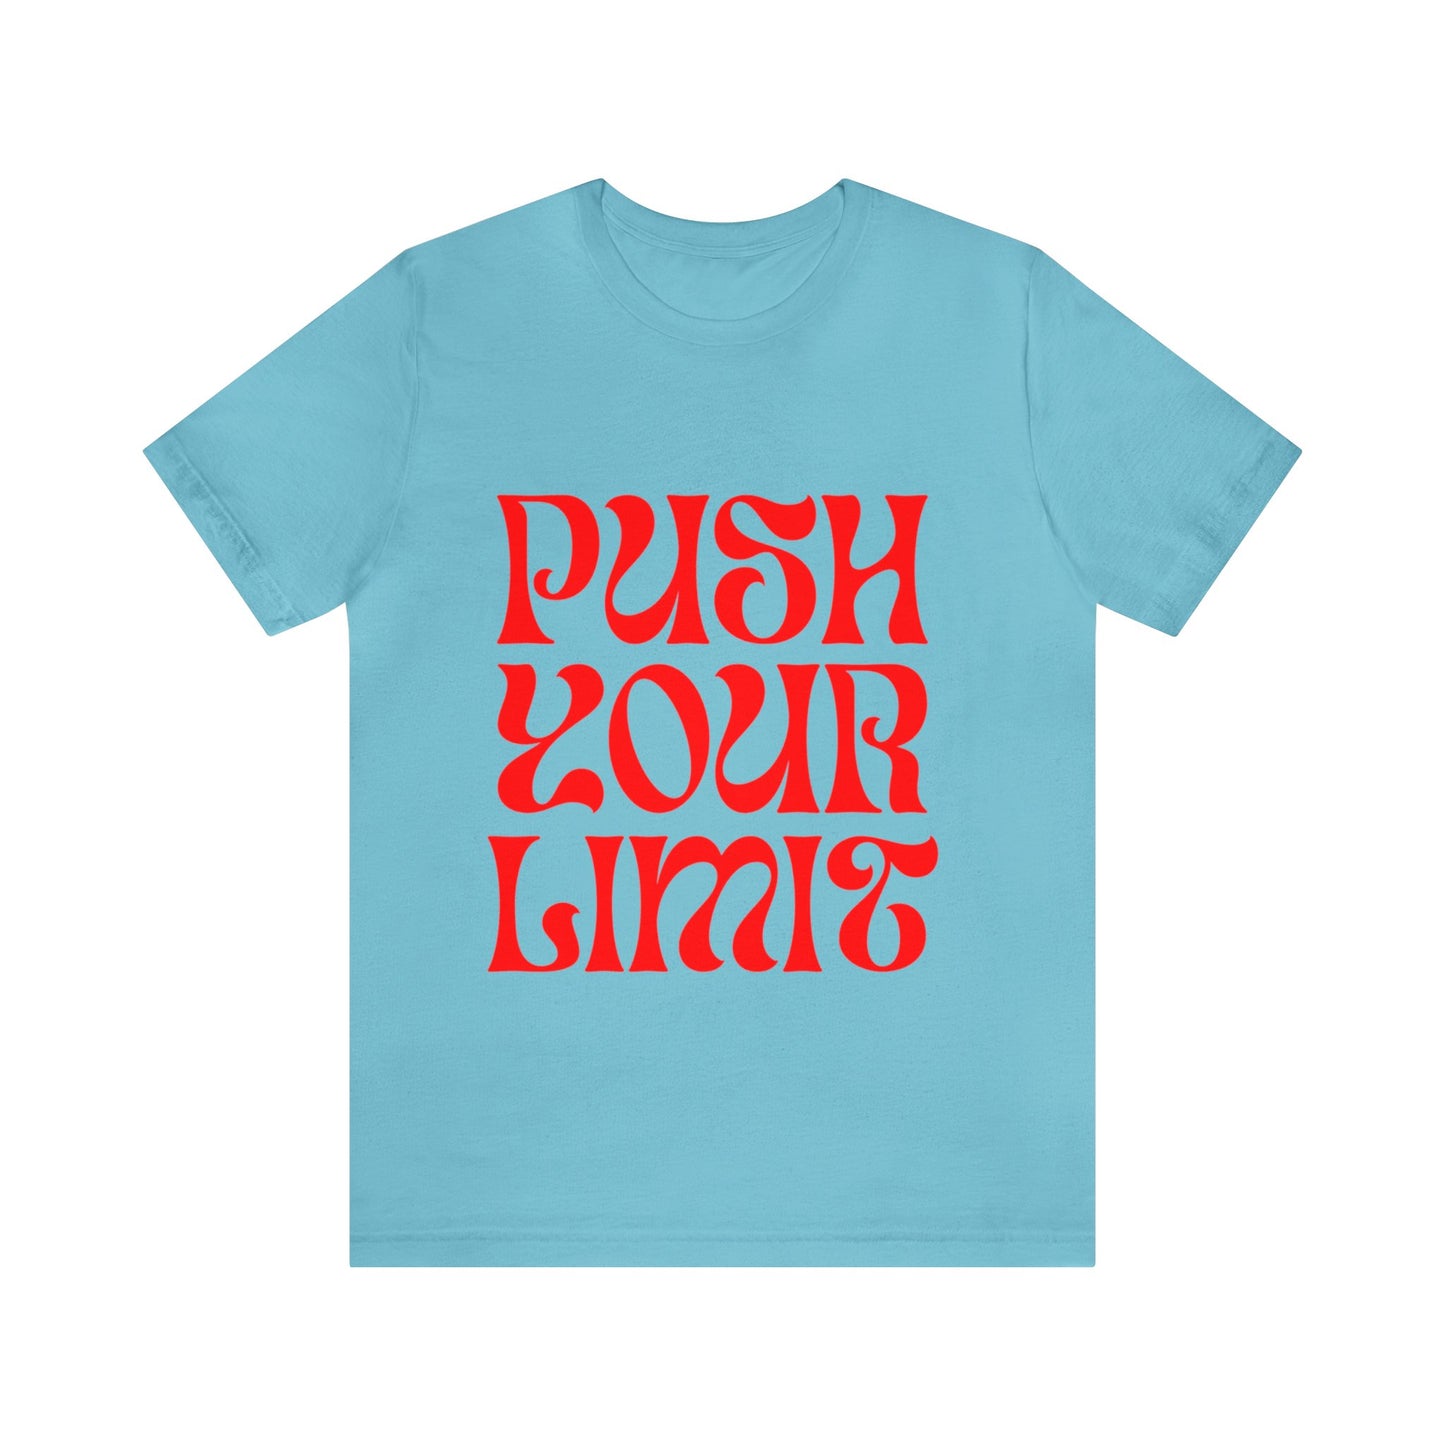 Push Your Limit - Inspirational, Motivational T Shirt for Men and Women